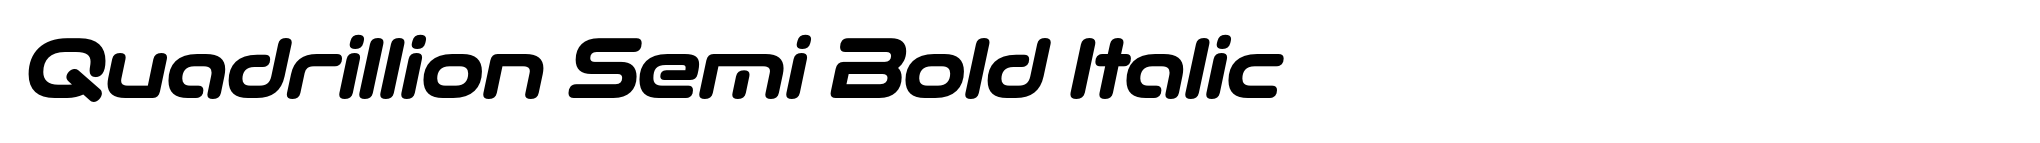 Quadrillion Semi Bold Italic image